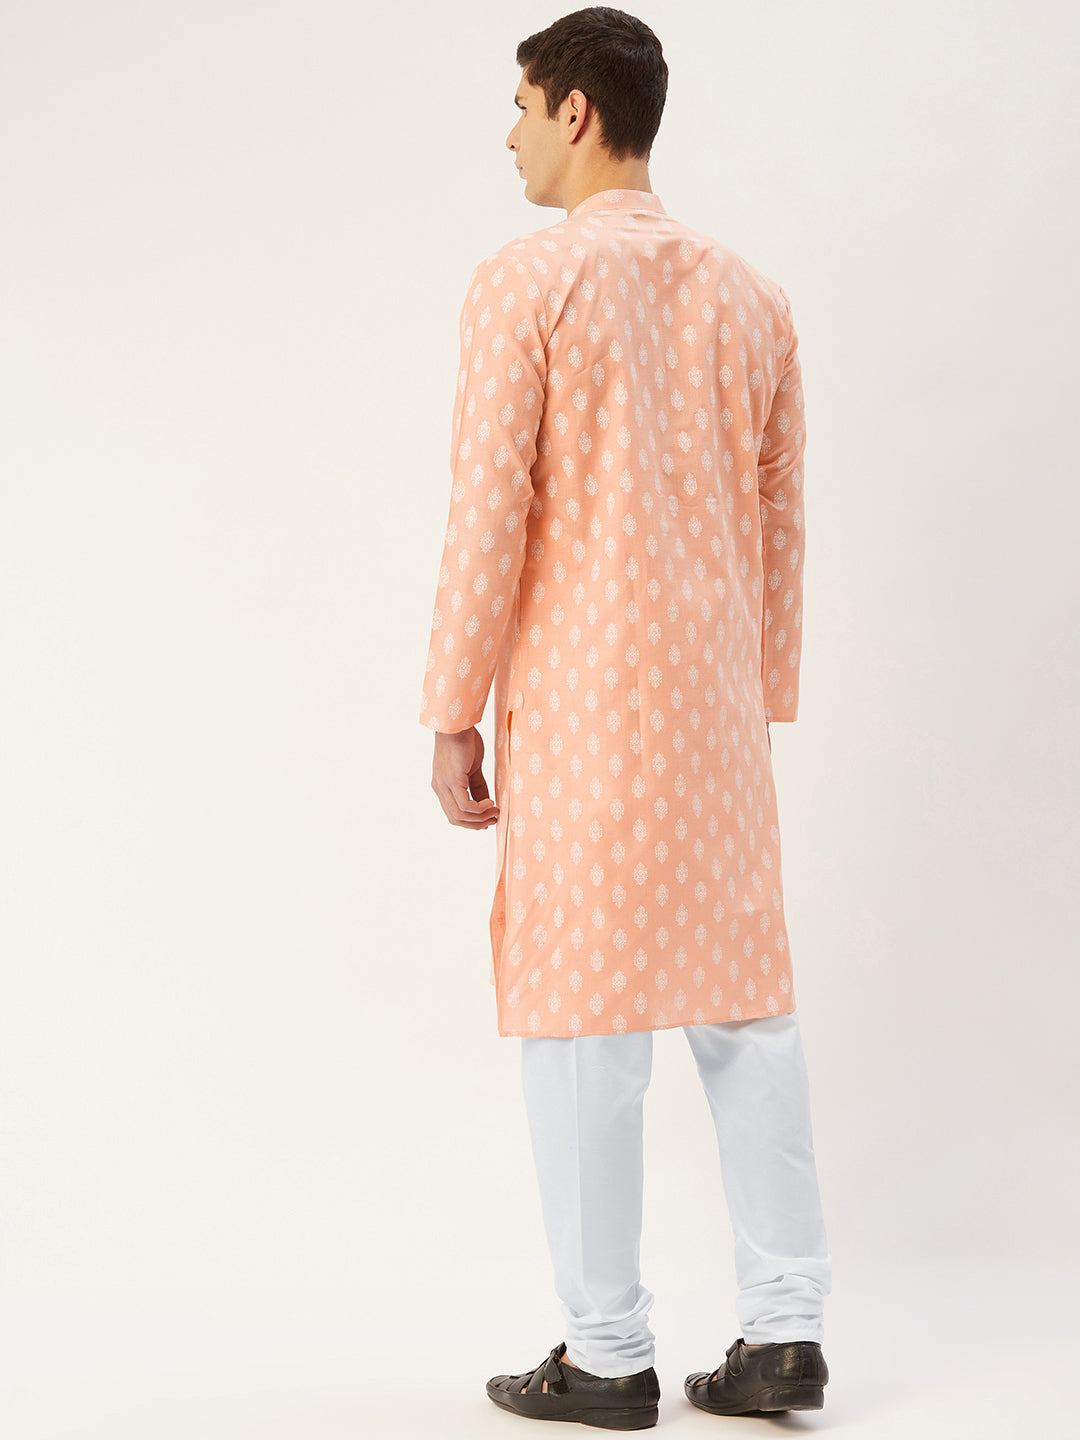 Jompers Men's Peach Cotton Floral printed kurta Pyjama Set